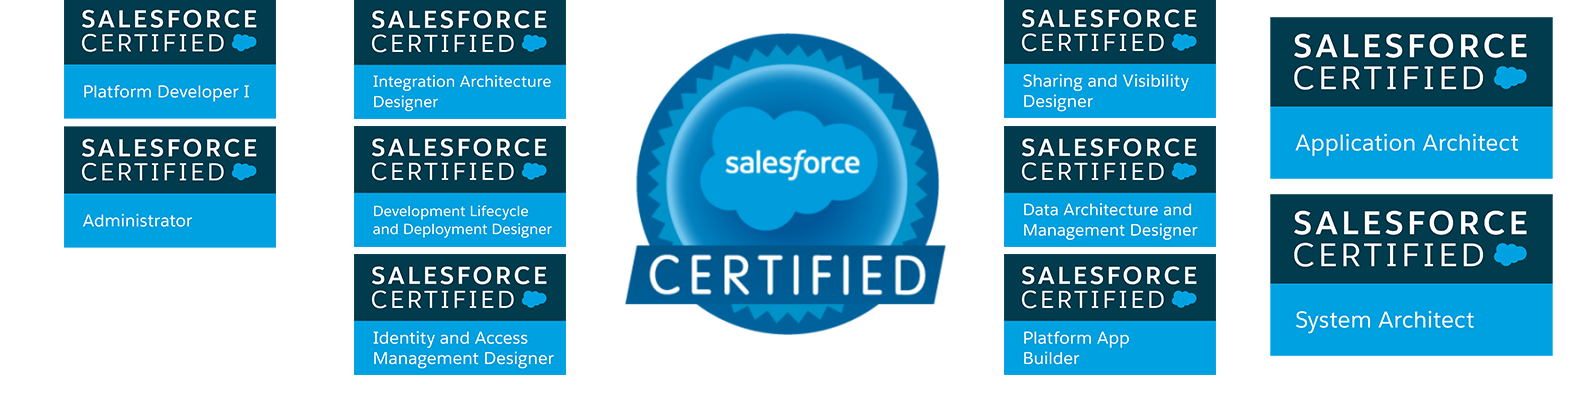 Salesforce Certified Banner